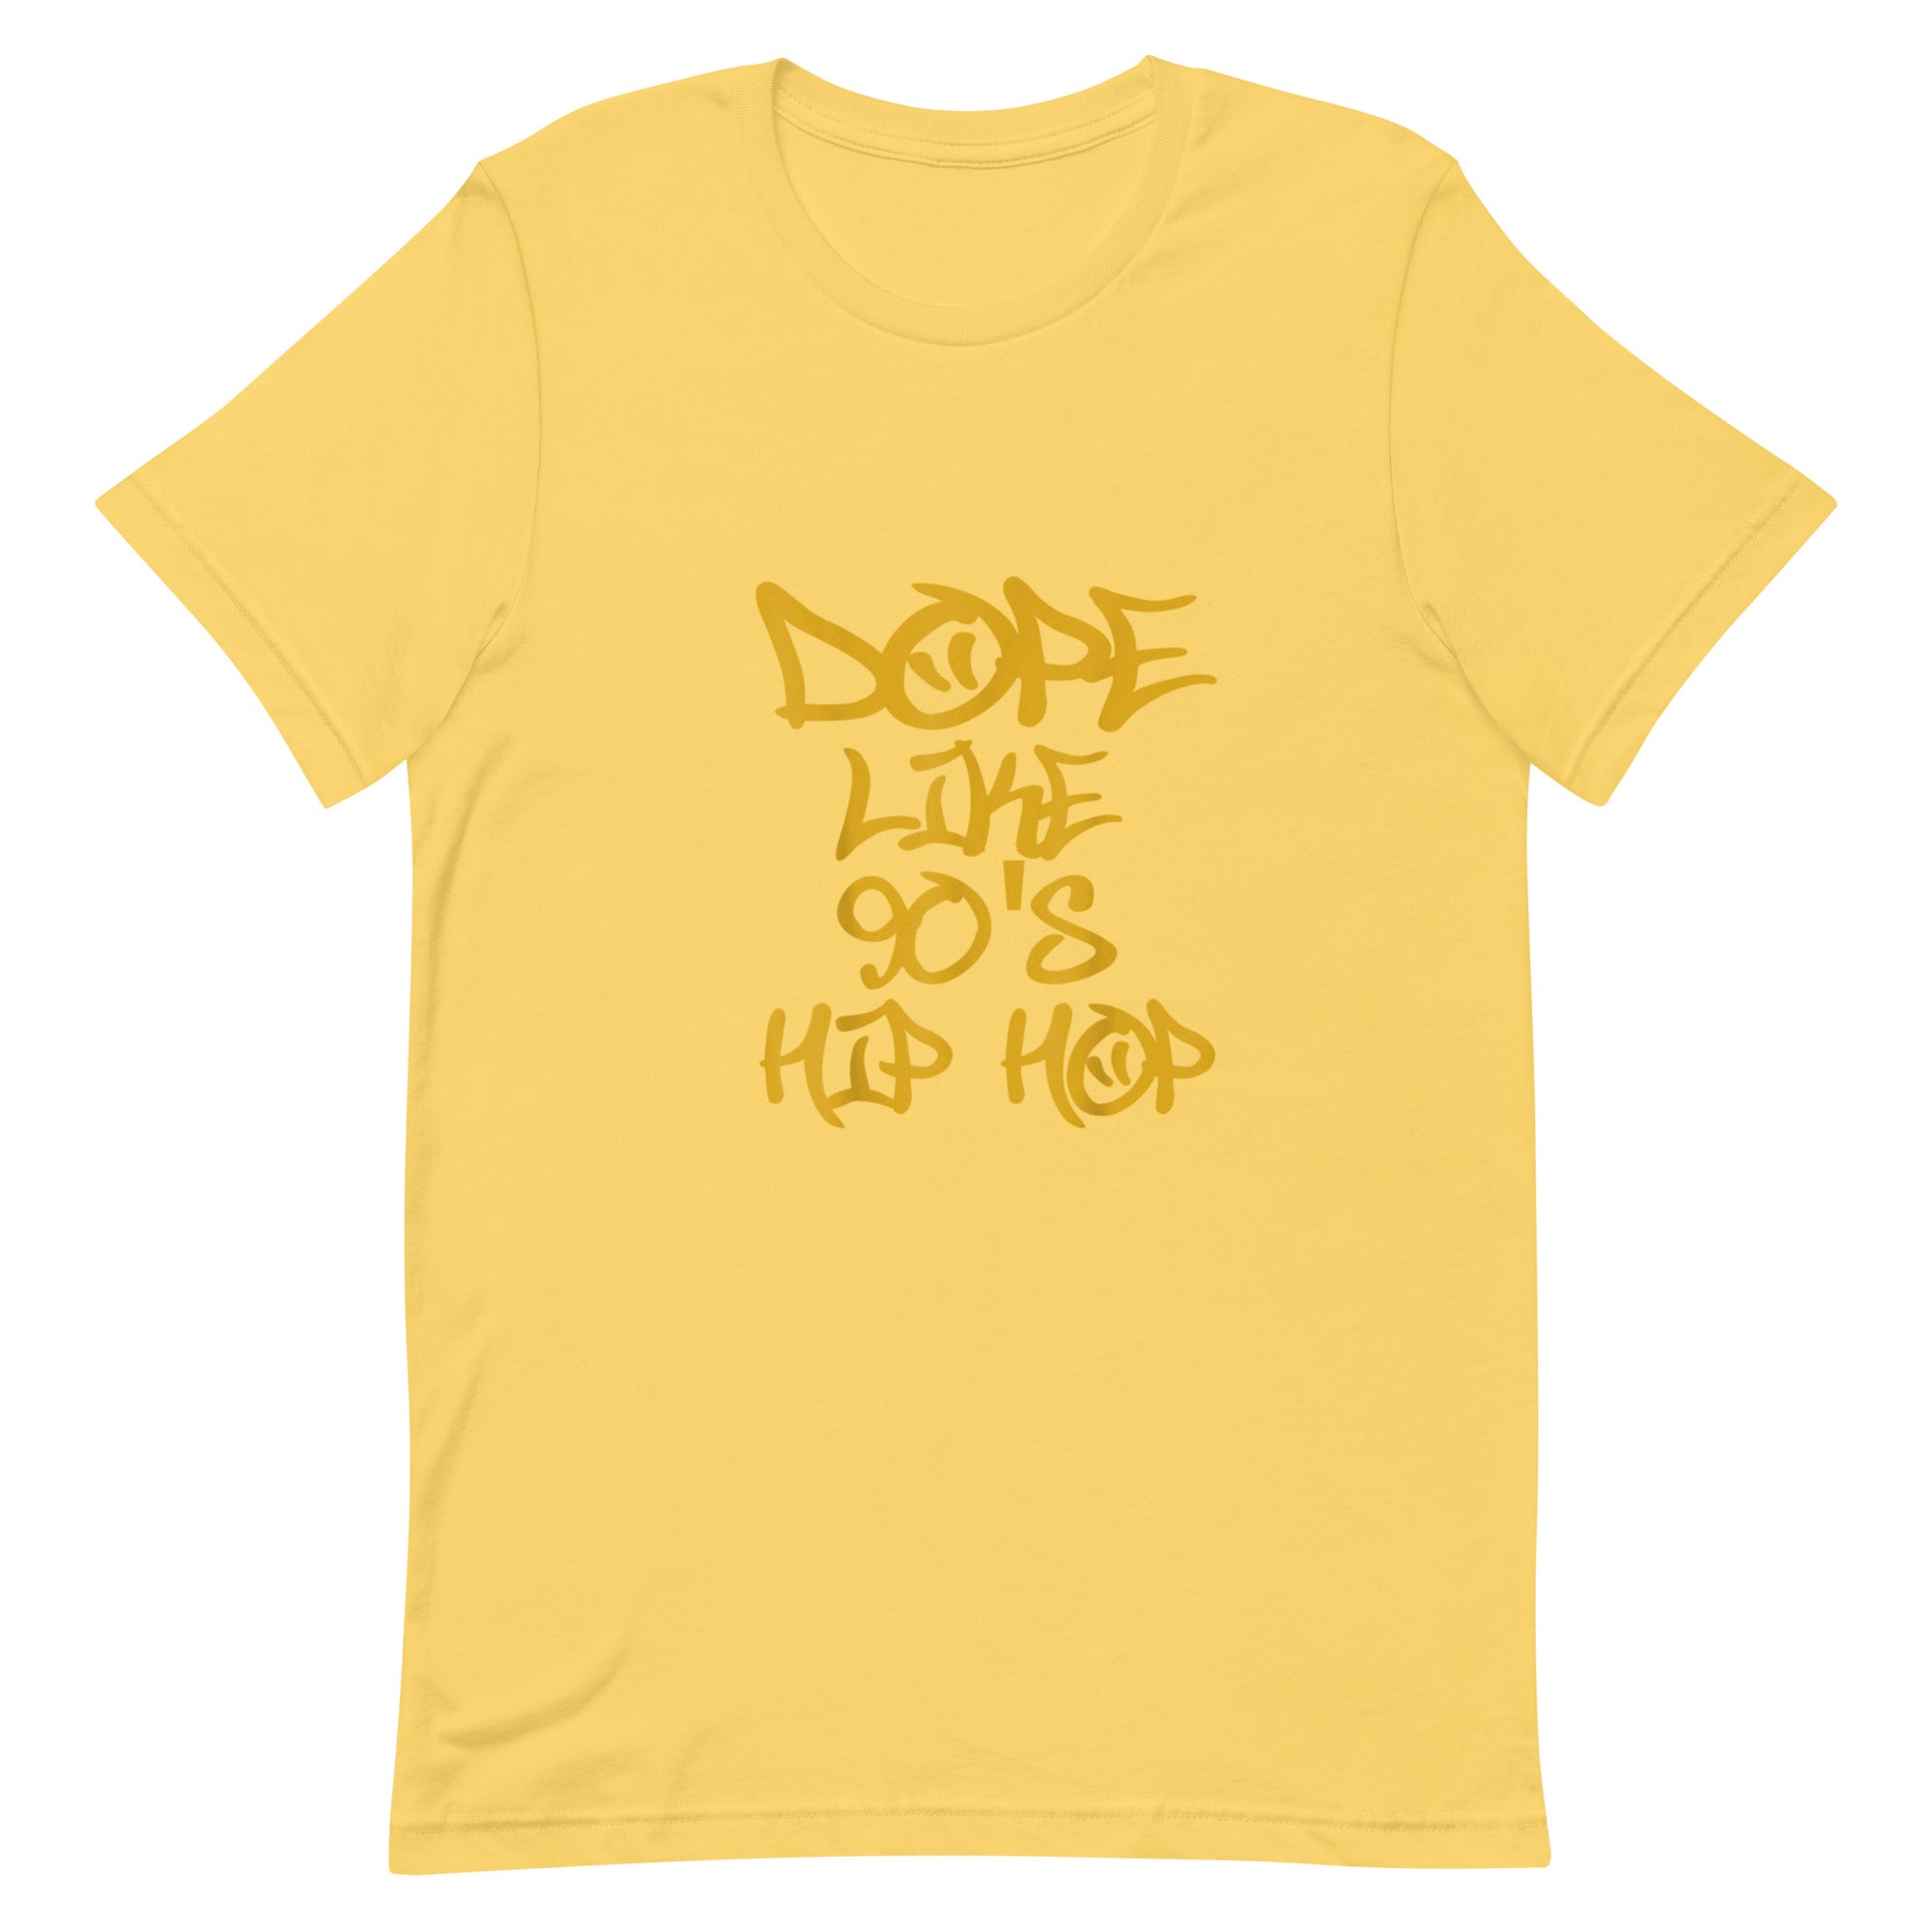 DOPE LIKE 90'S HIP HOP Unisex t-shirt